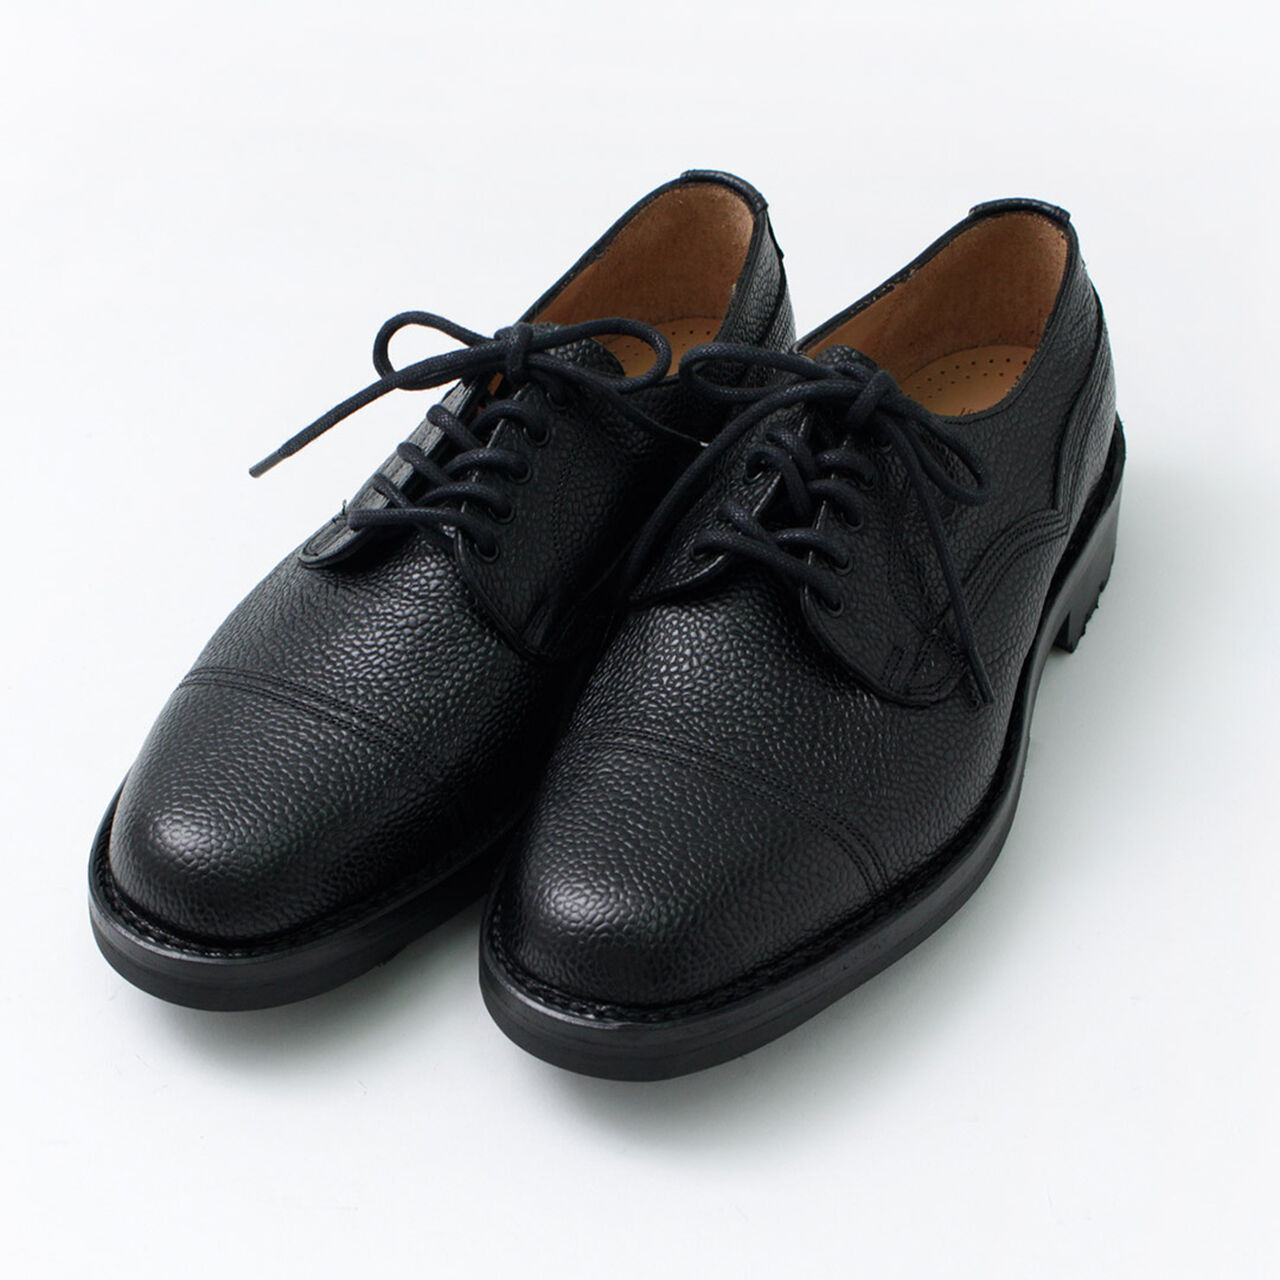 CAIRNGORM 2 C Leather Shoes,Black, large image number 0